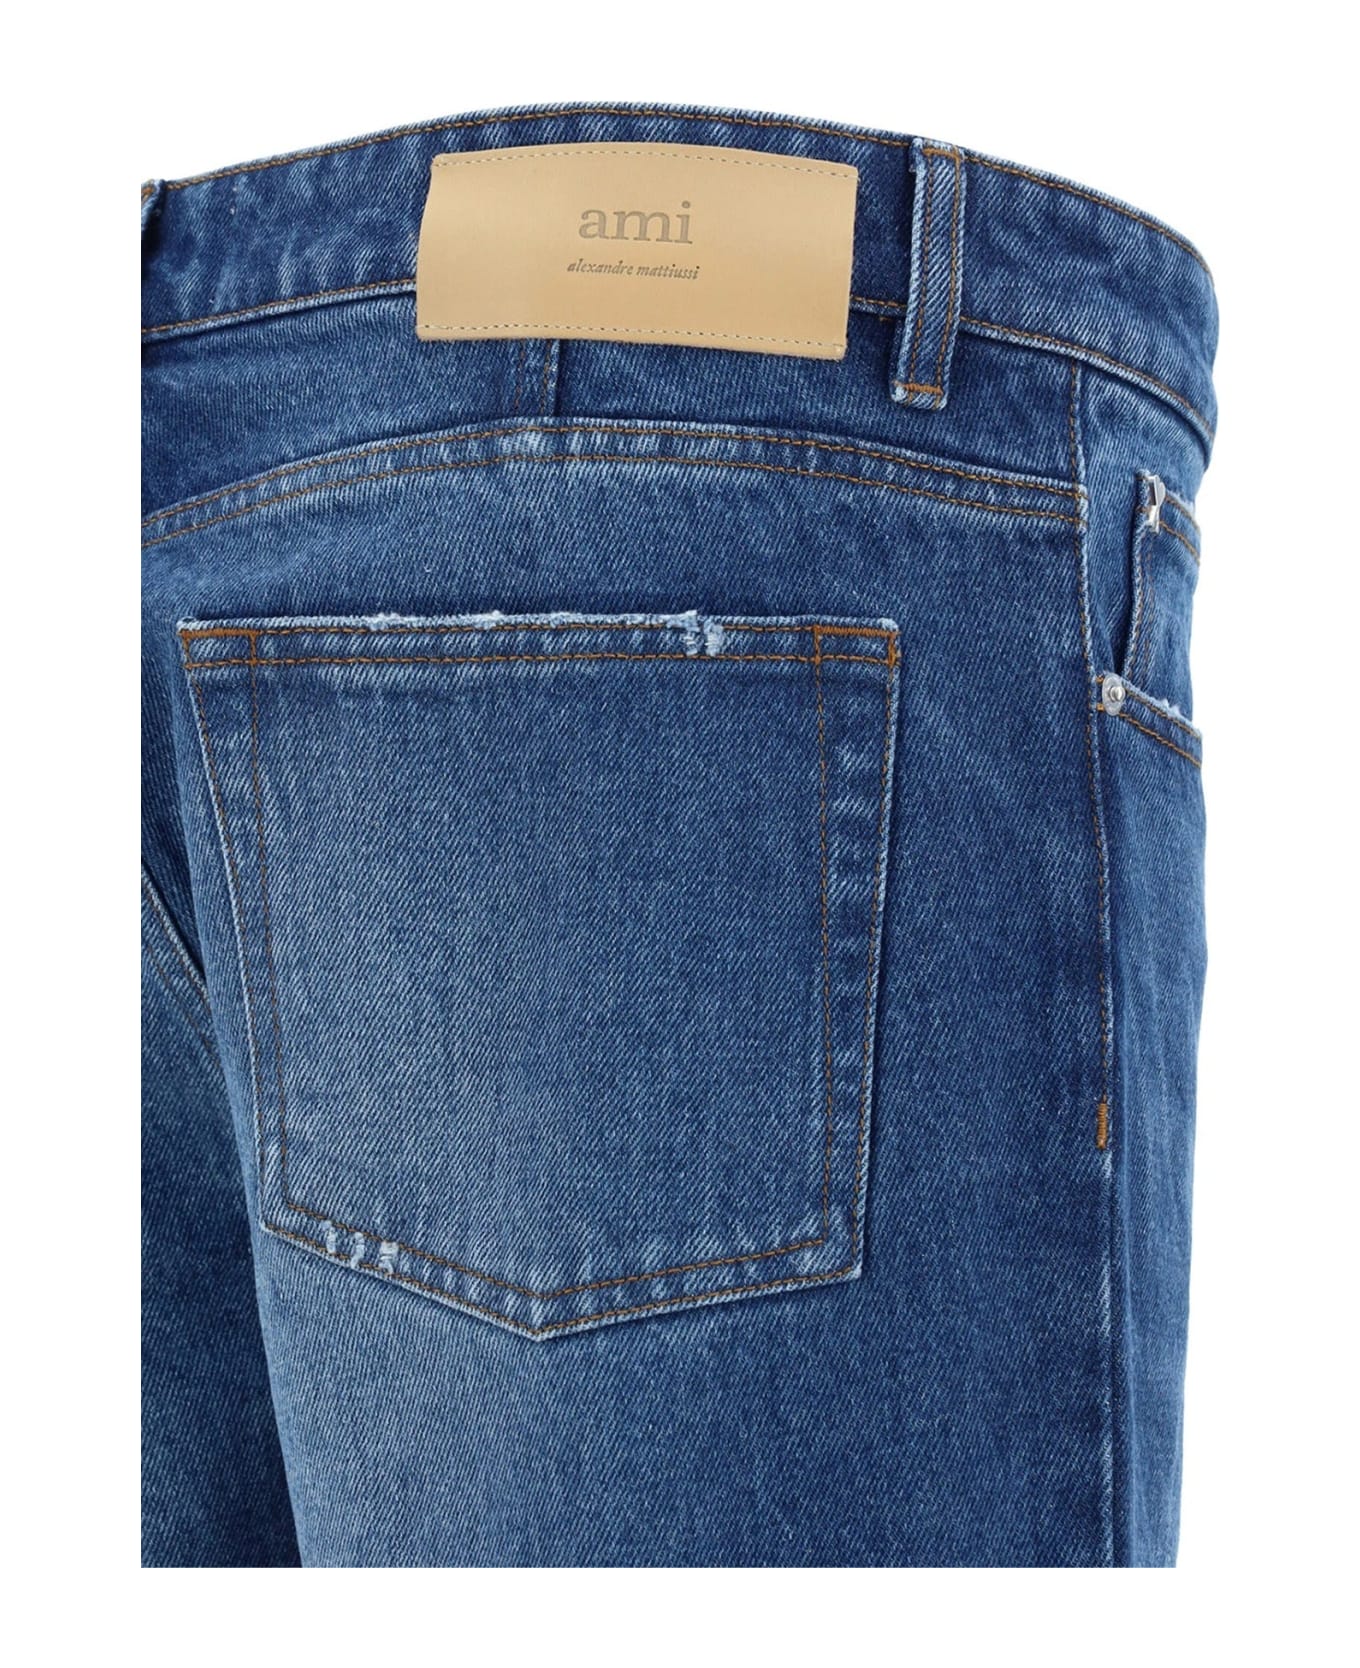 Ami Alexandre Mattiussi Classic Fit Jeans - Blue